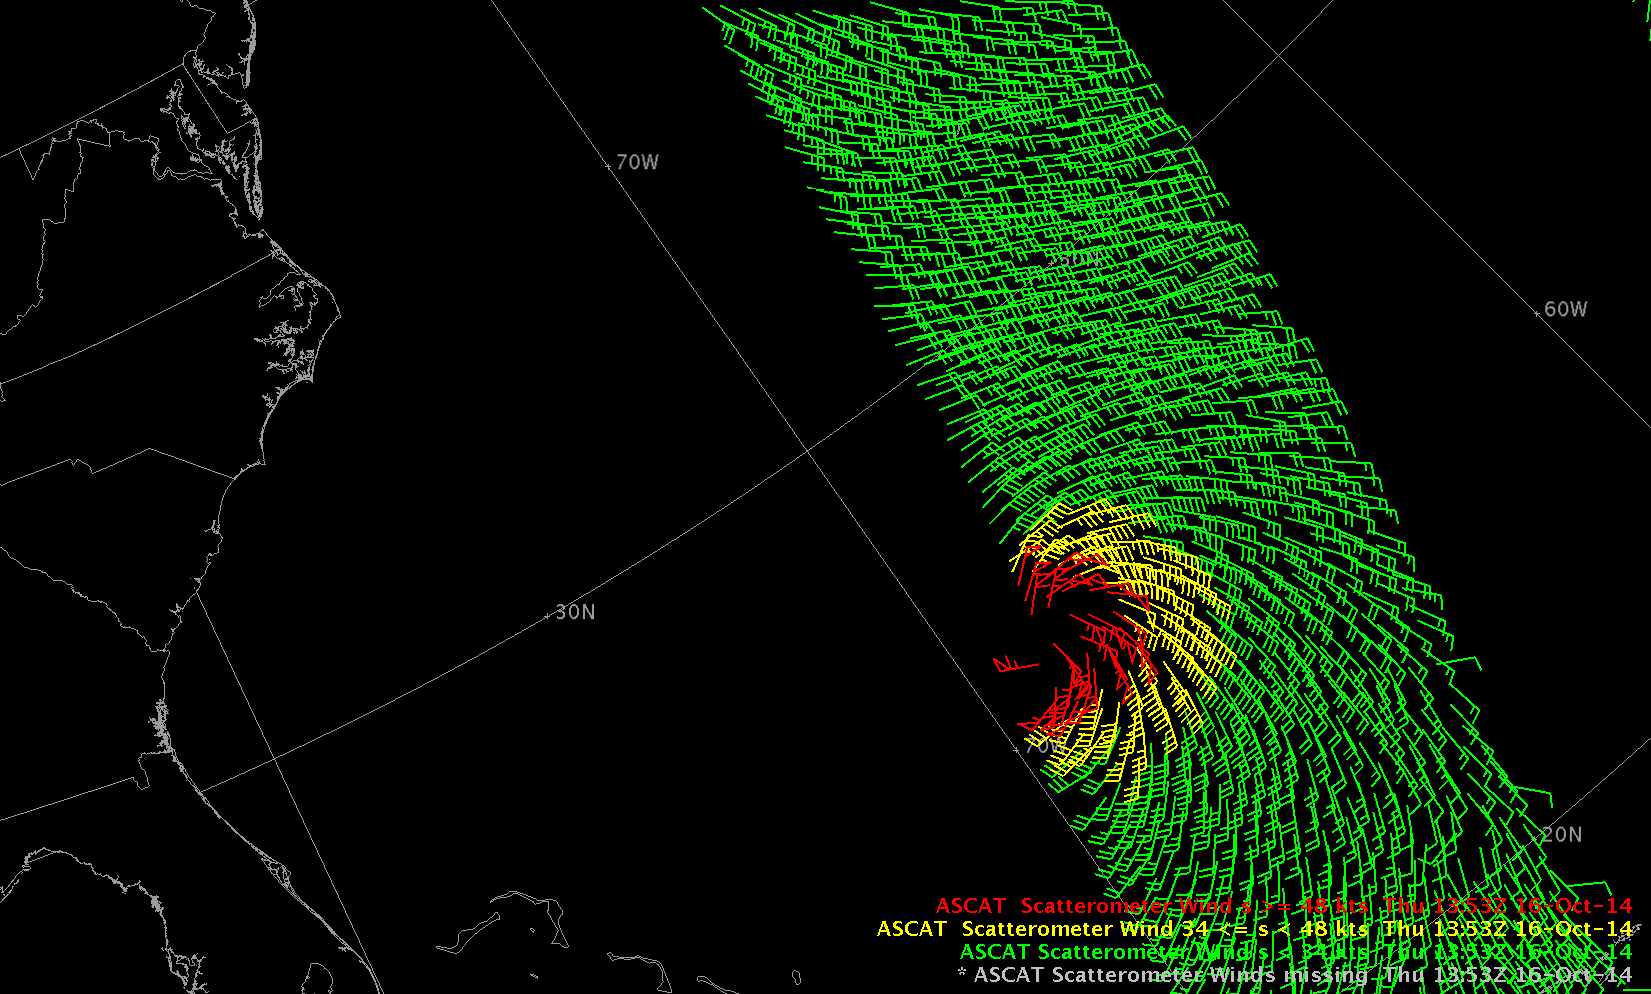 METOP-A ASCAT Scatterometer winds, 1353 UTC 16 October 2014 (click to enlarge)